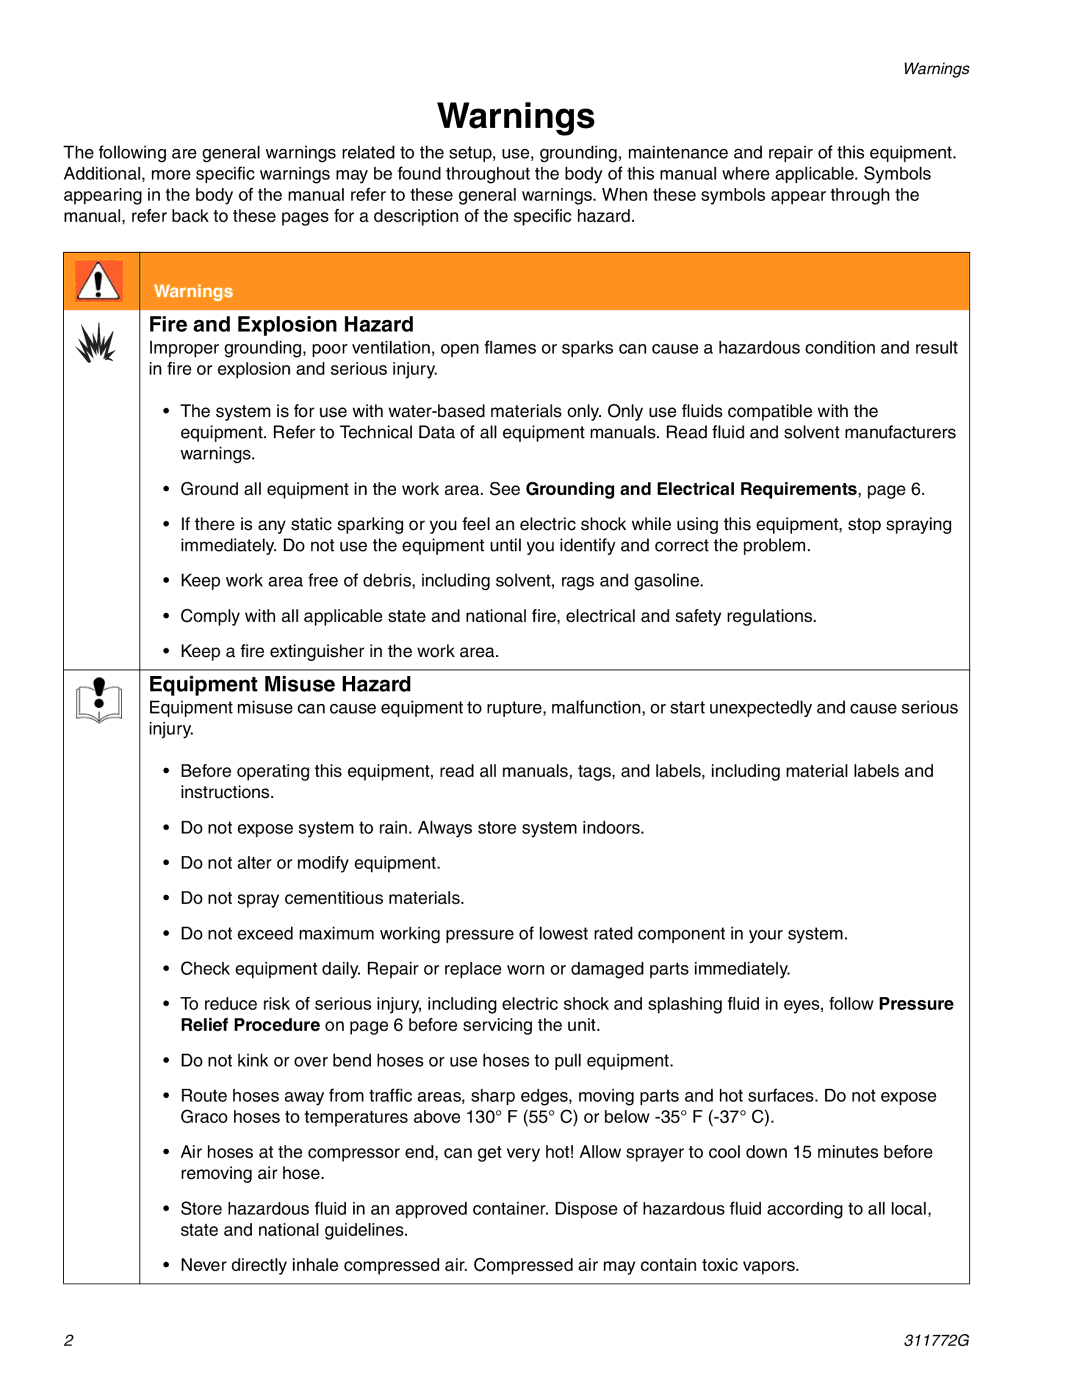 Hitachi RTX 900 important safety instructions Fire and Explosion Hazard, Equipment Misuse Hazard 